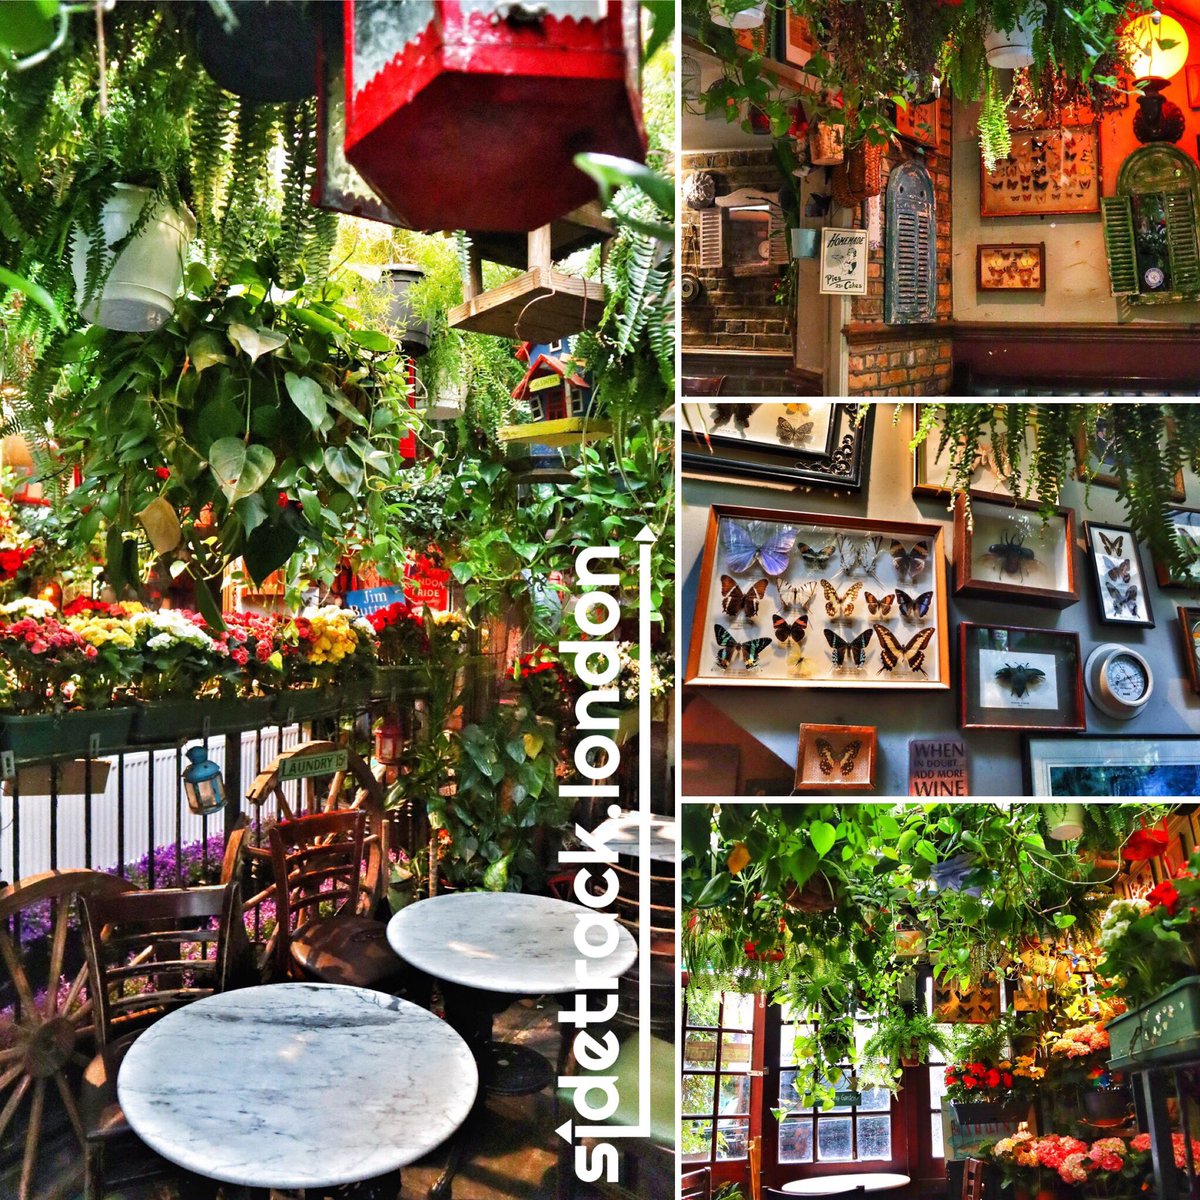 ❤️#DecorGoals: #Plants, #birdhouses & #antiques in The Butterfly Room Thai restaurant at @ChurchillArmsW8 in #NottingHill 🌱

 #decor #decorideas #interior #interiors #interiordesign  #plant #greenery #antique #quirky #quirkydecor #pubdecor #pub #restaurantdecor #london #bar